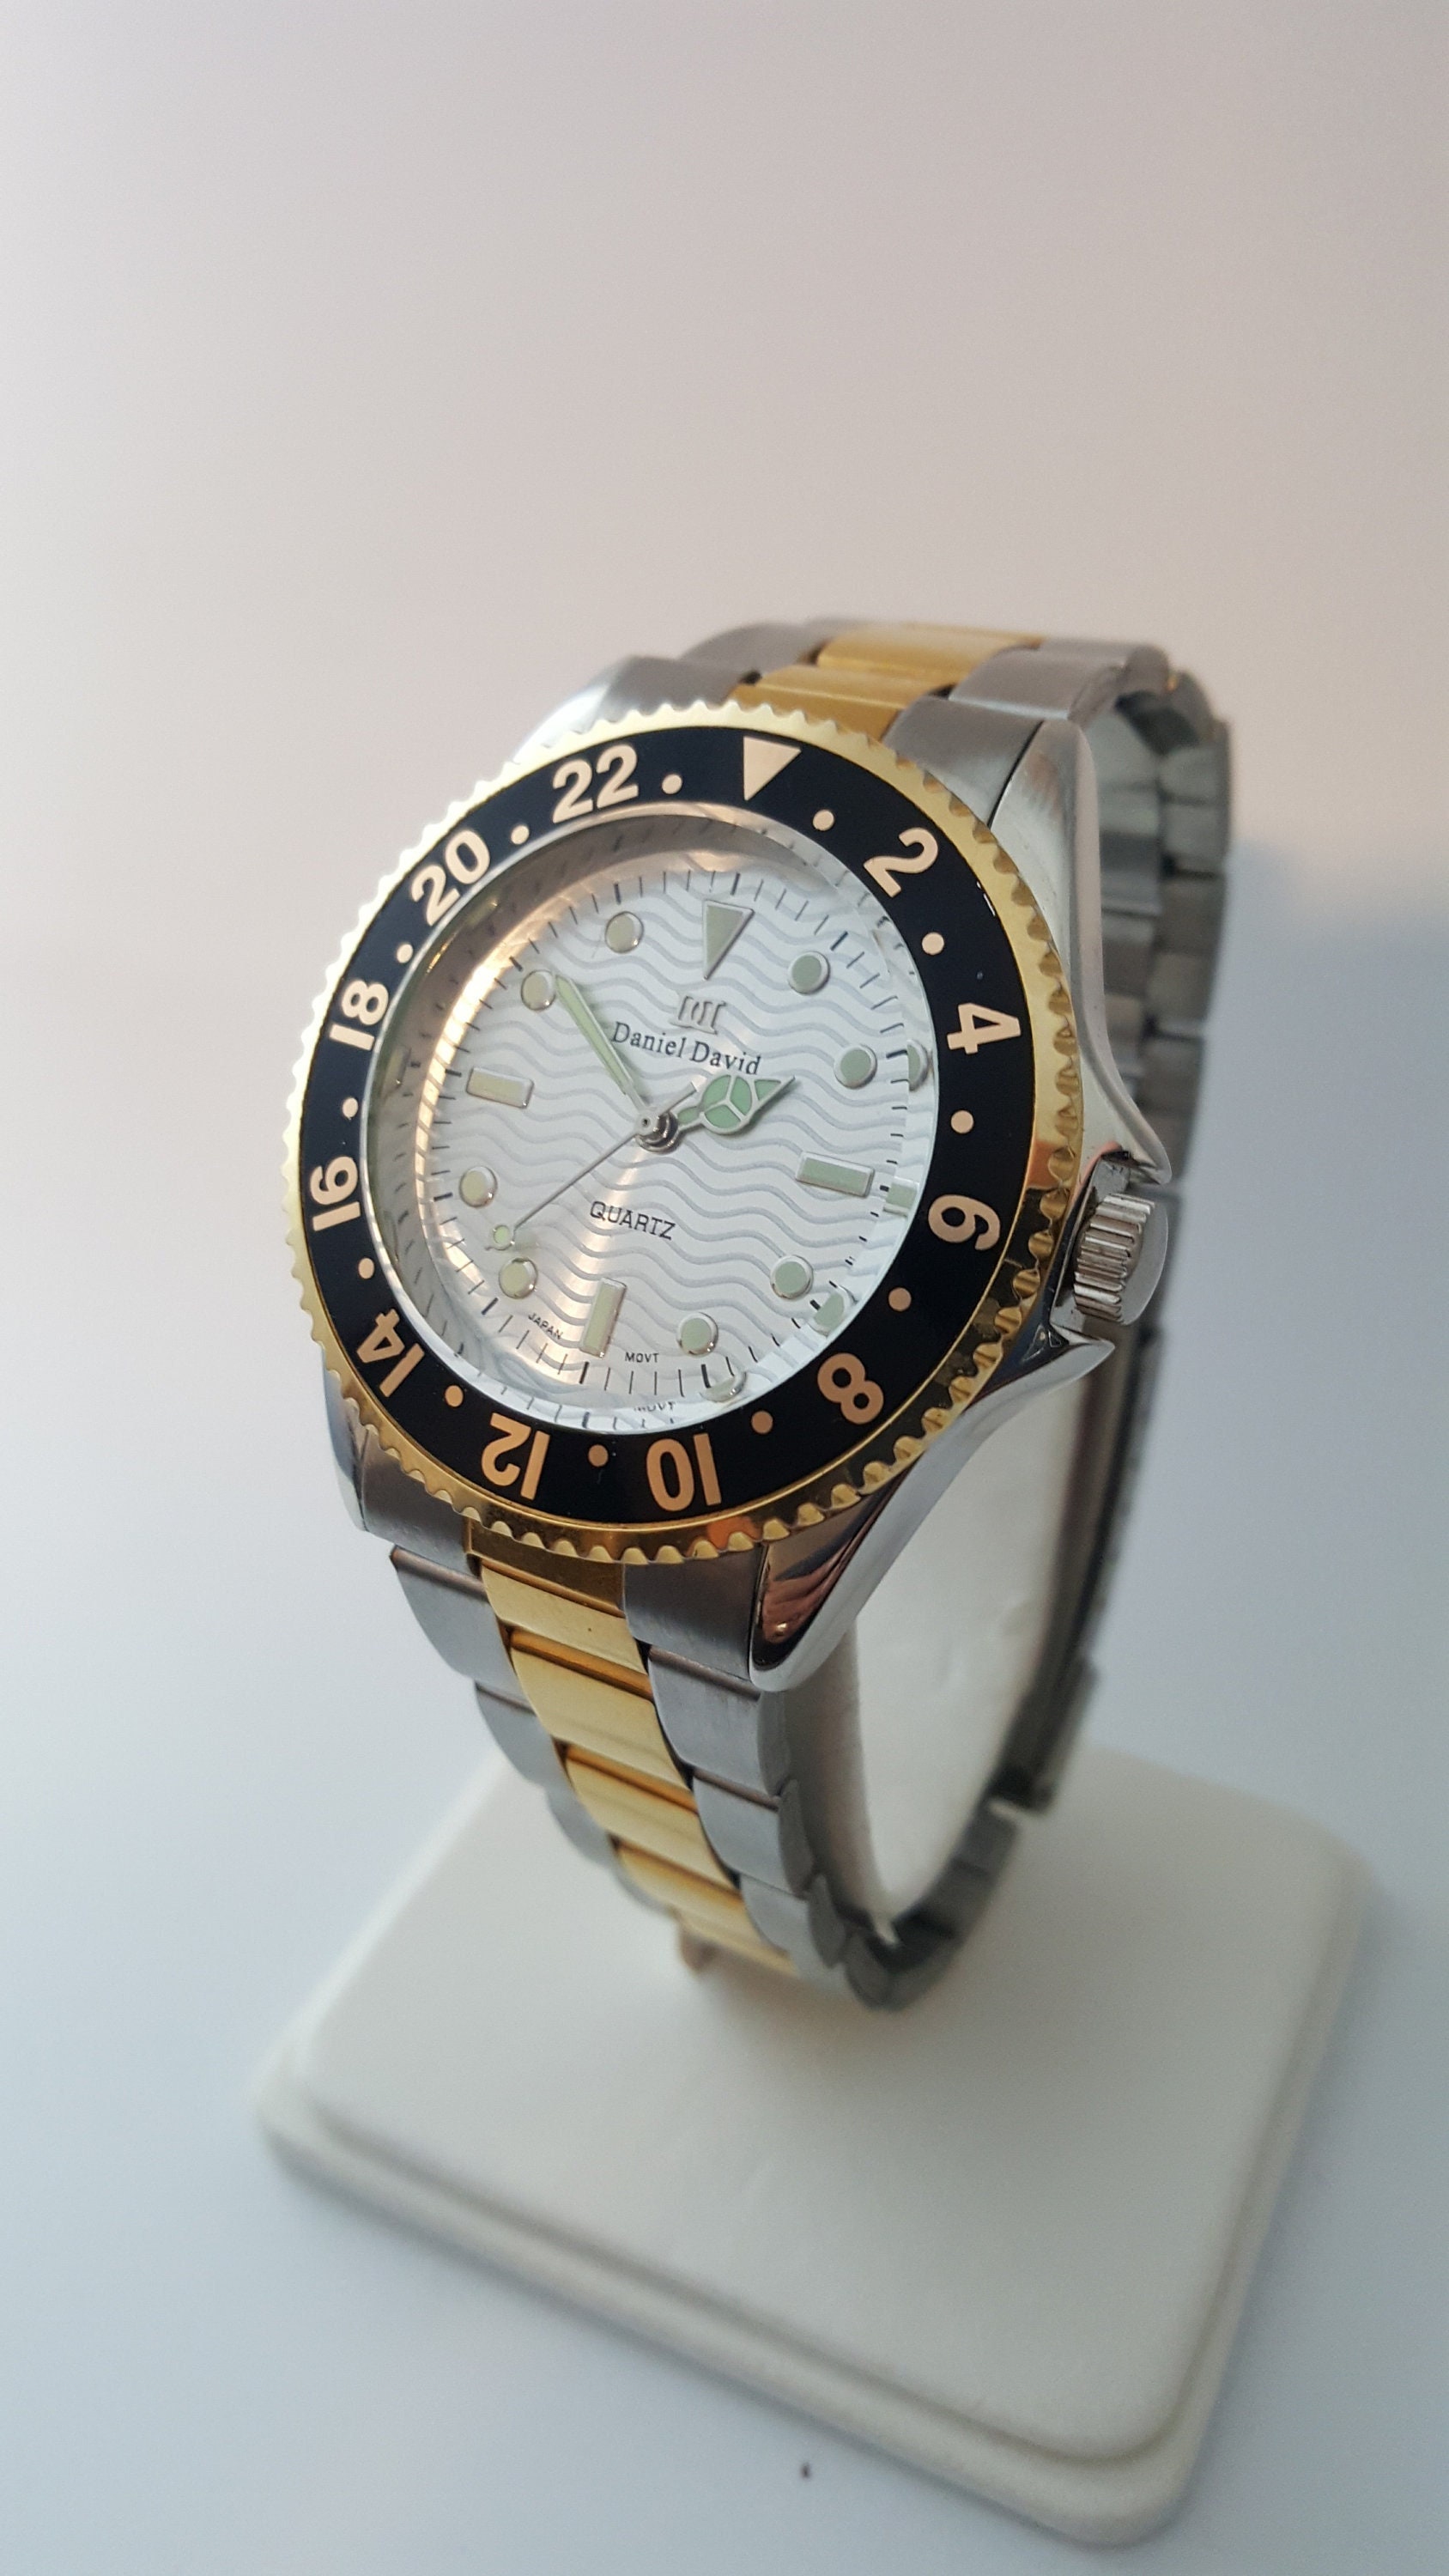 Reloj Swatch Hombre Irony Chrono Carbonium Dream YVS495 - Joyería de Moda